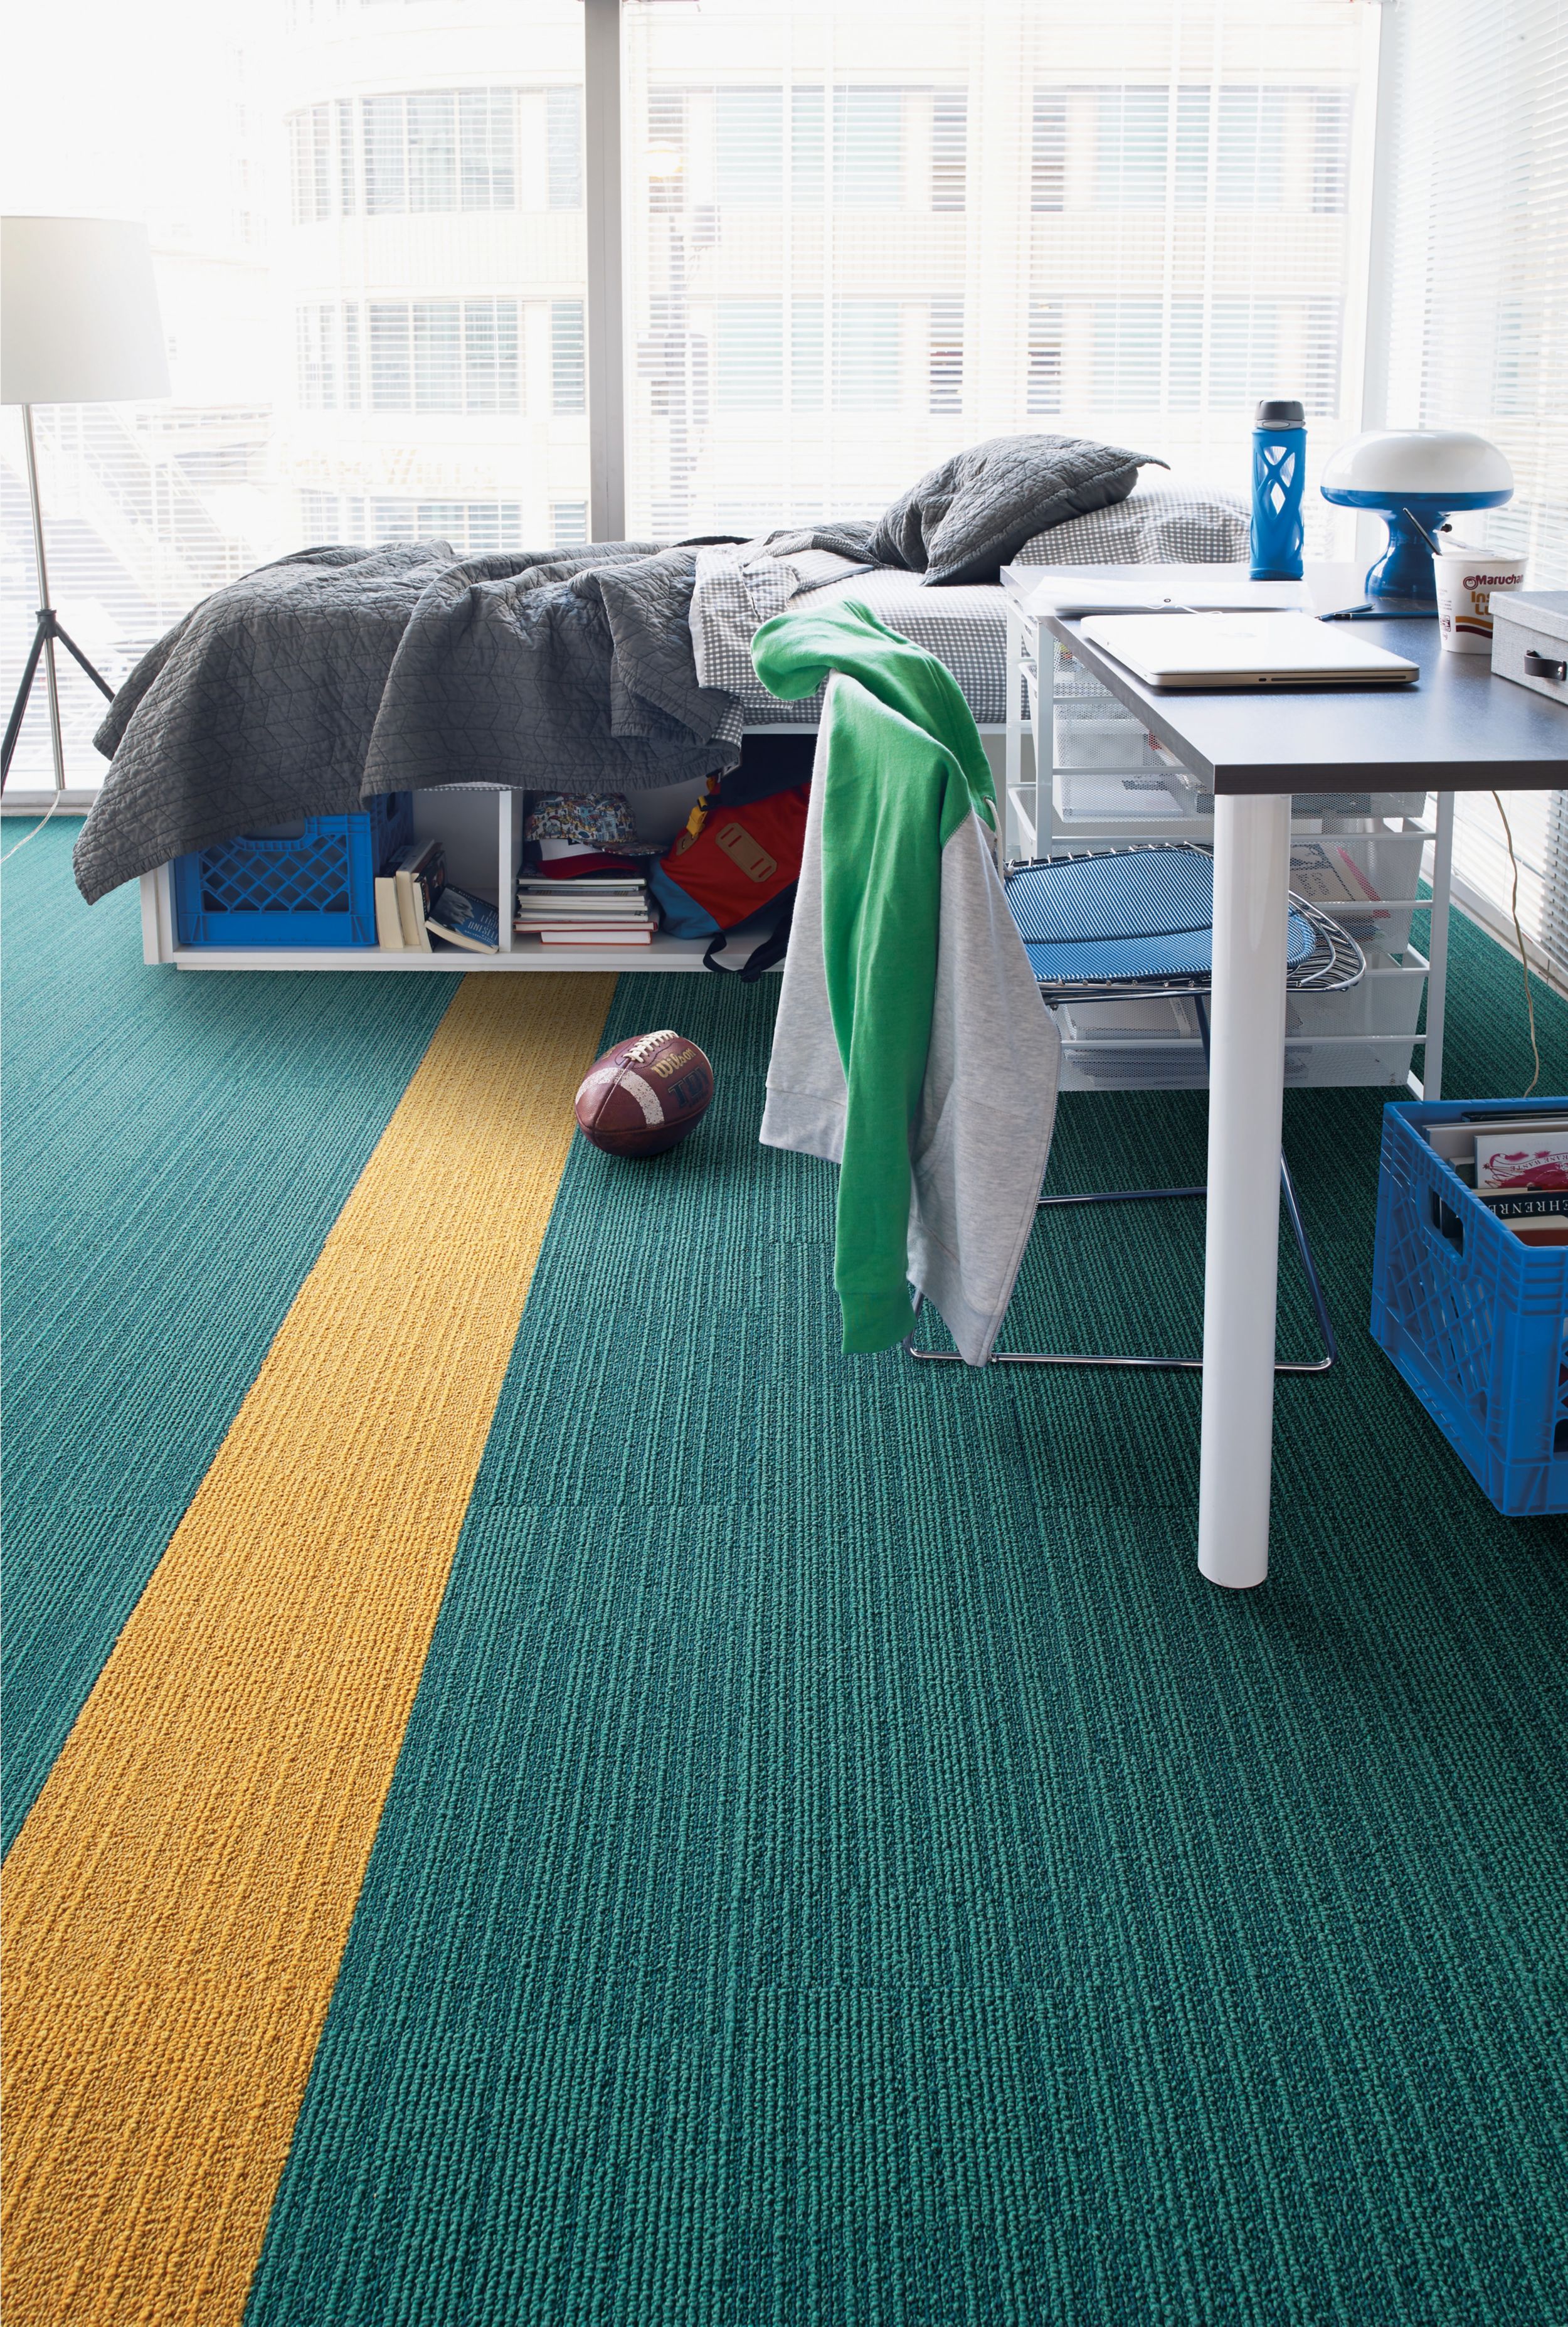 Interface On Line plank carpet tile in dorm room with football on floor imagen número 3